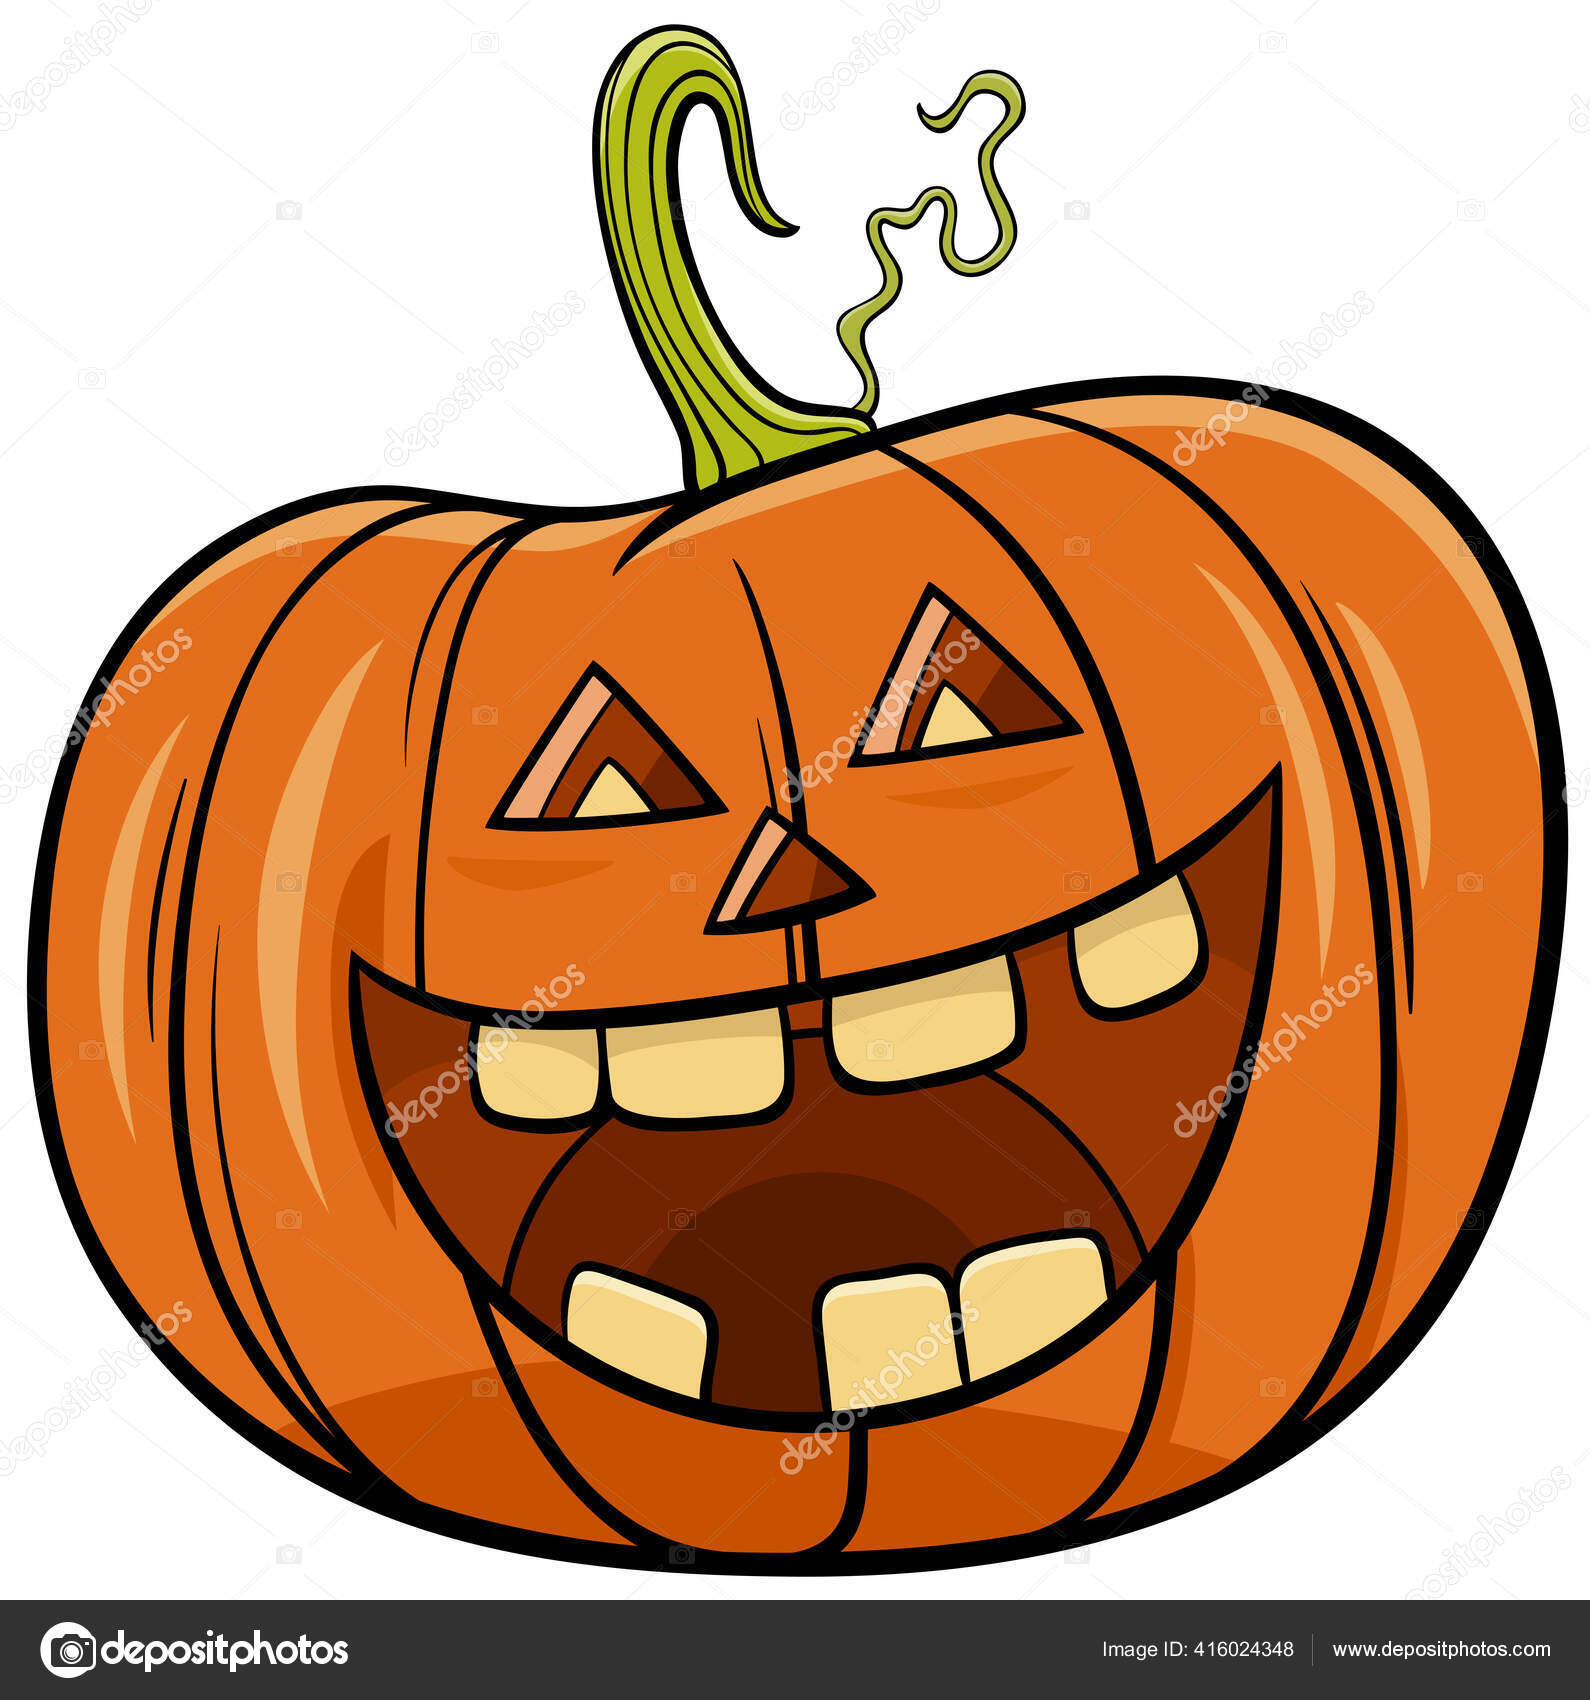 Desenho de Assustador Halloween Jakc-o-Lantern para colorir